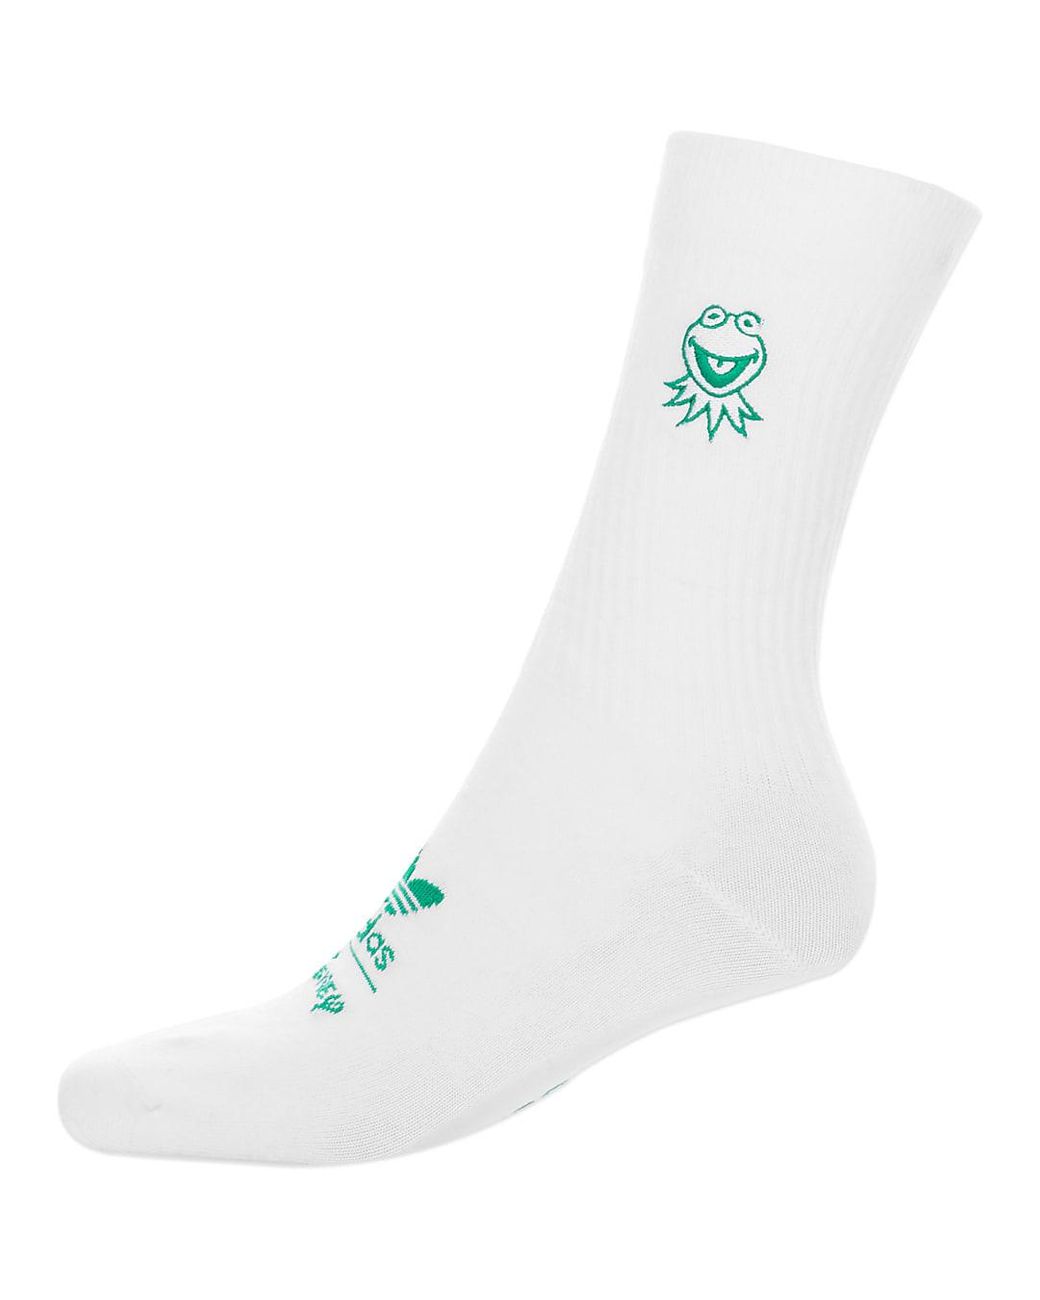 adidas Originals Adidas X Disney Kermit Socks in White | Lyst